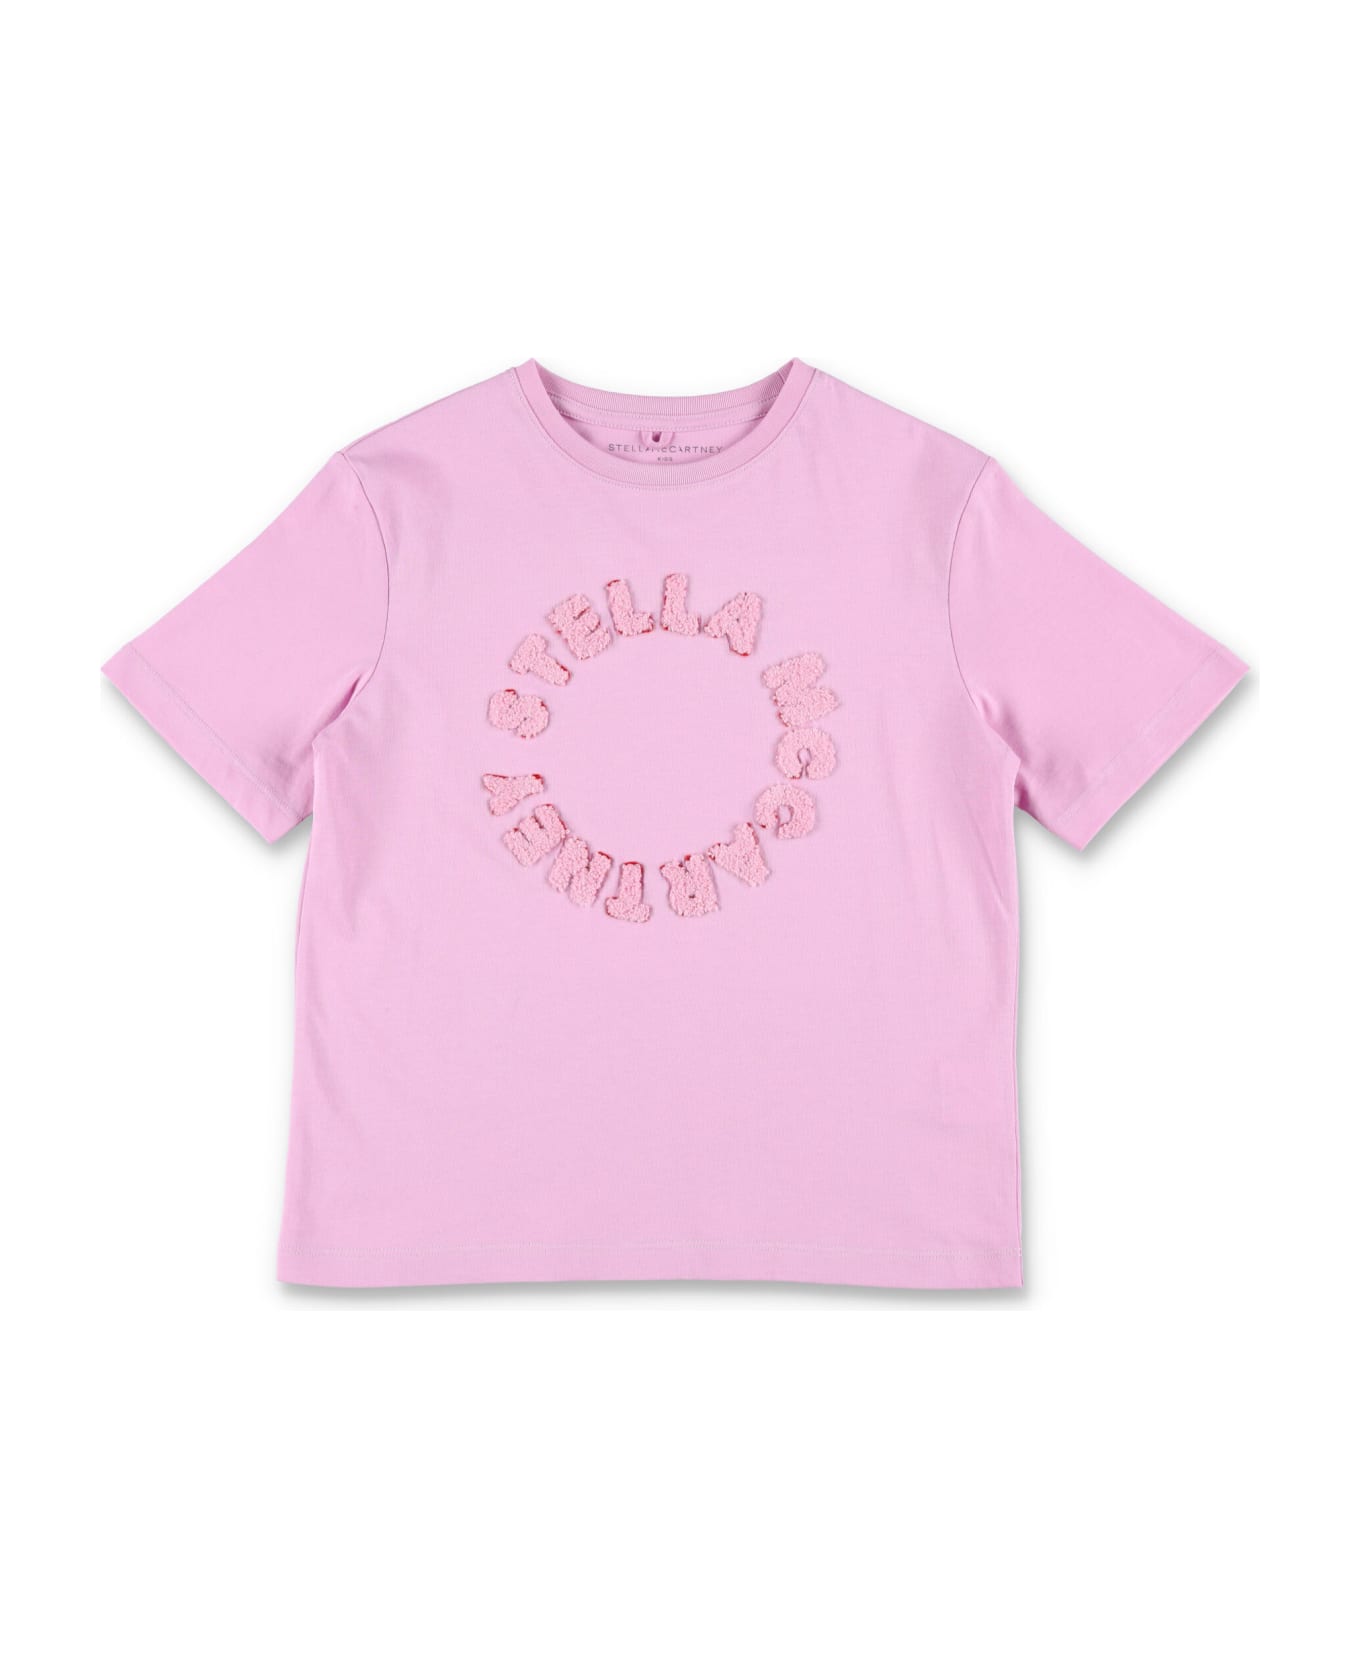 Stella McCartney Medallion Logo T-shirt - Pink